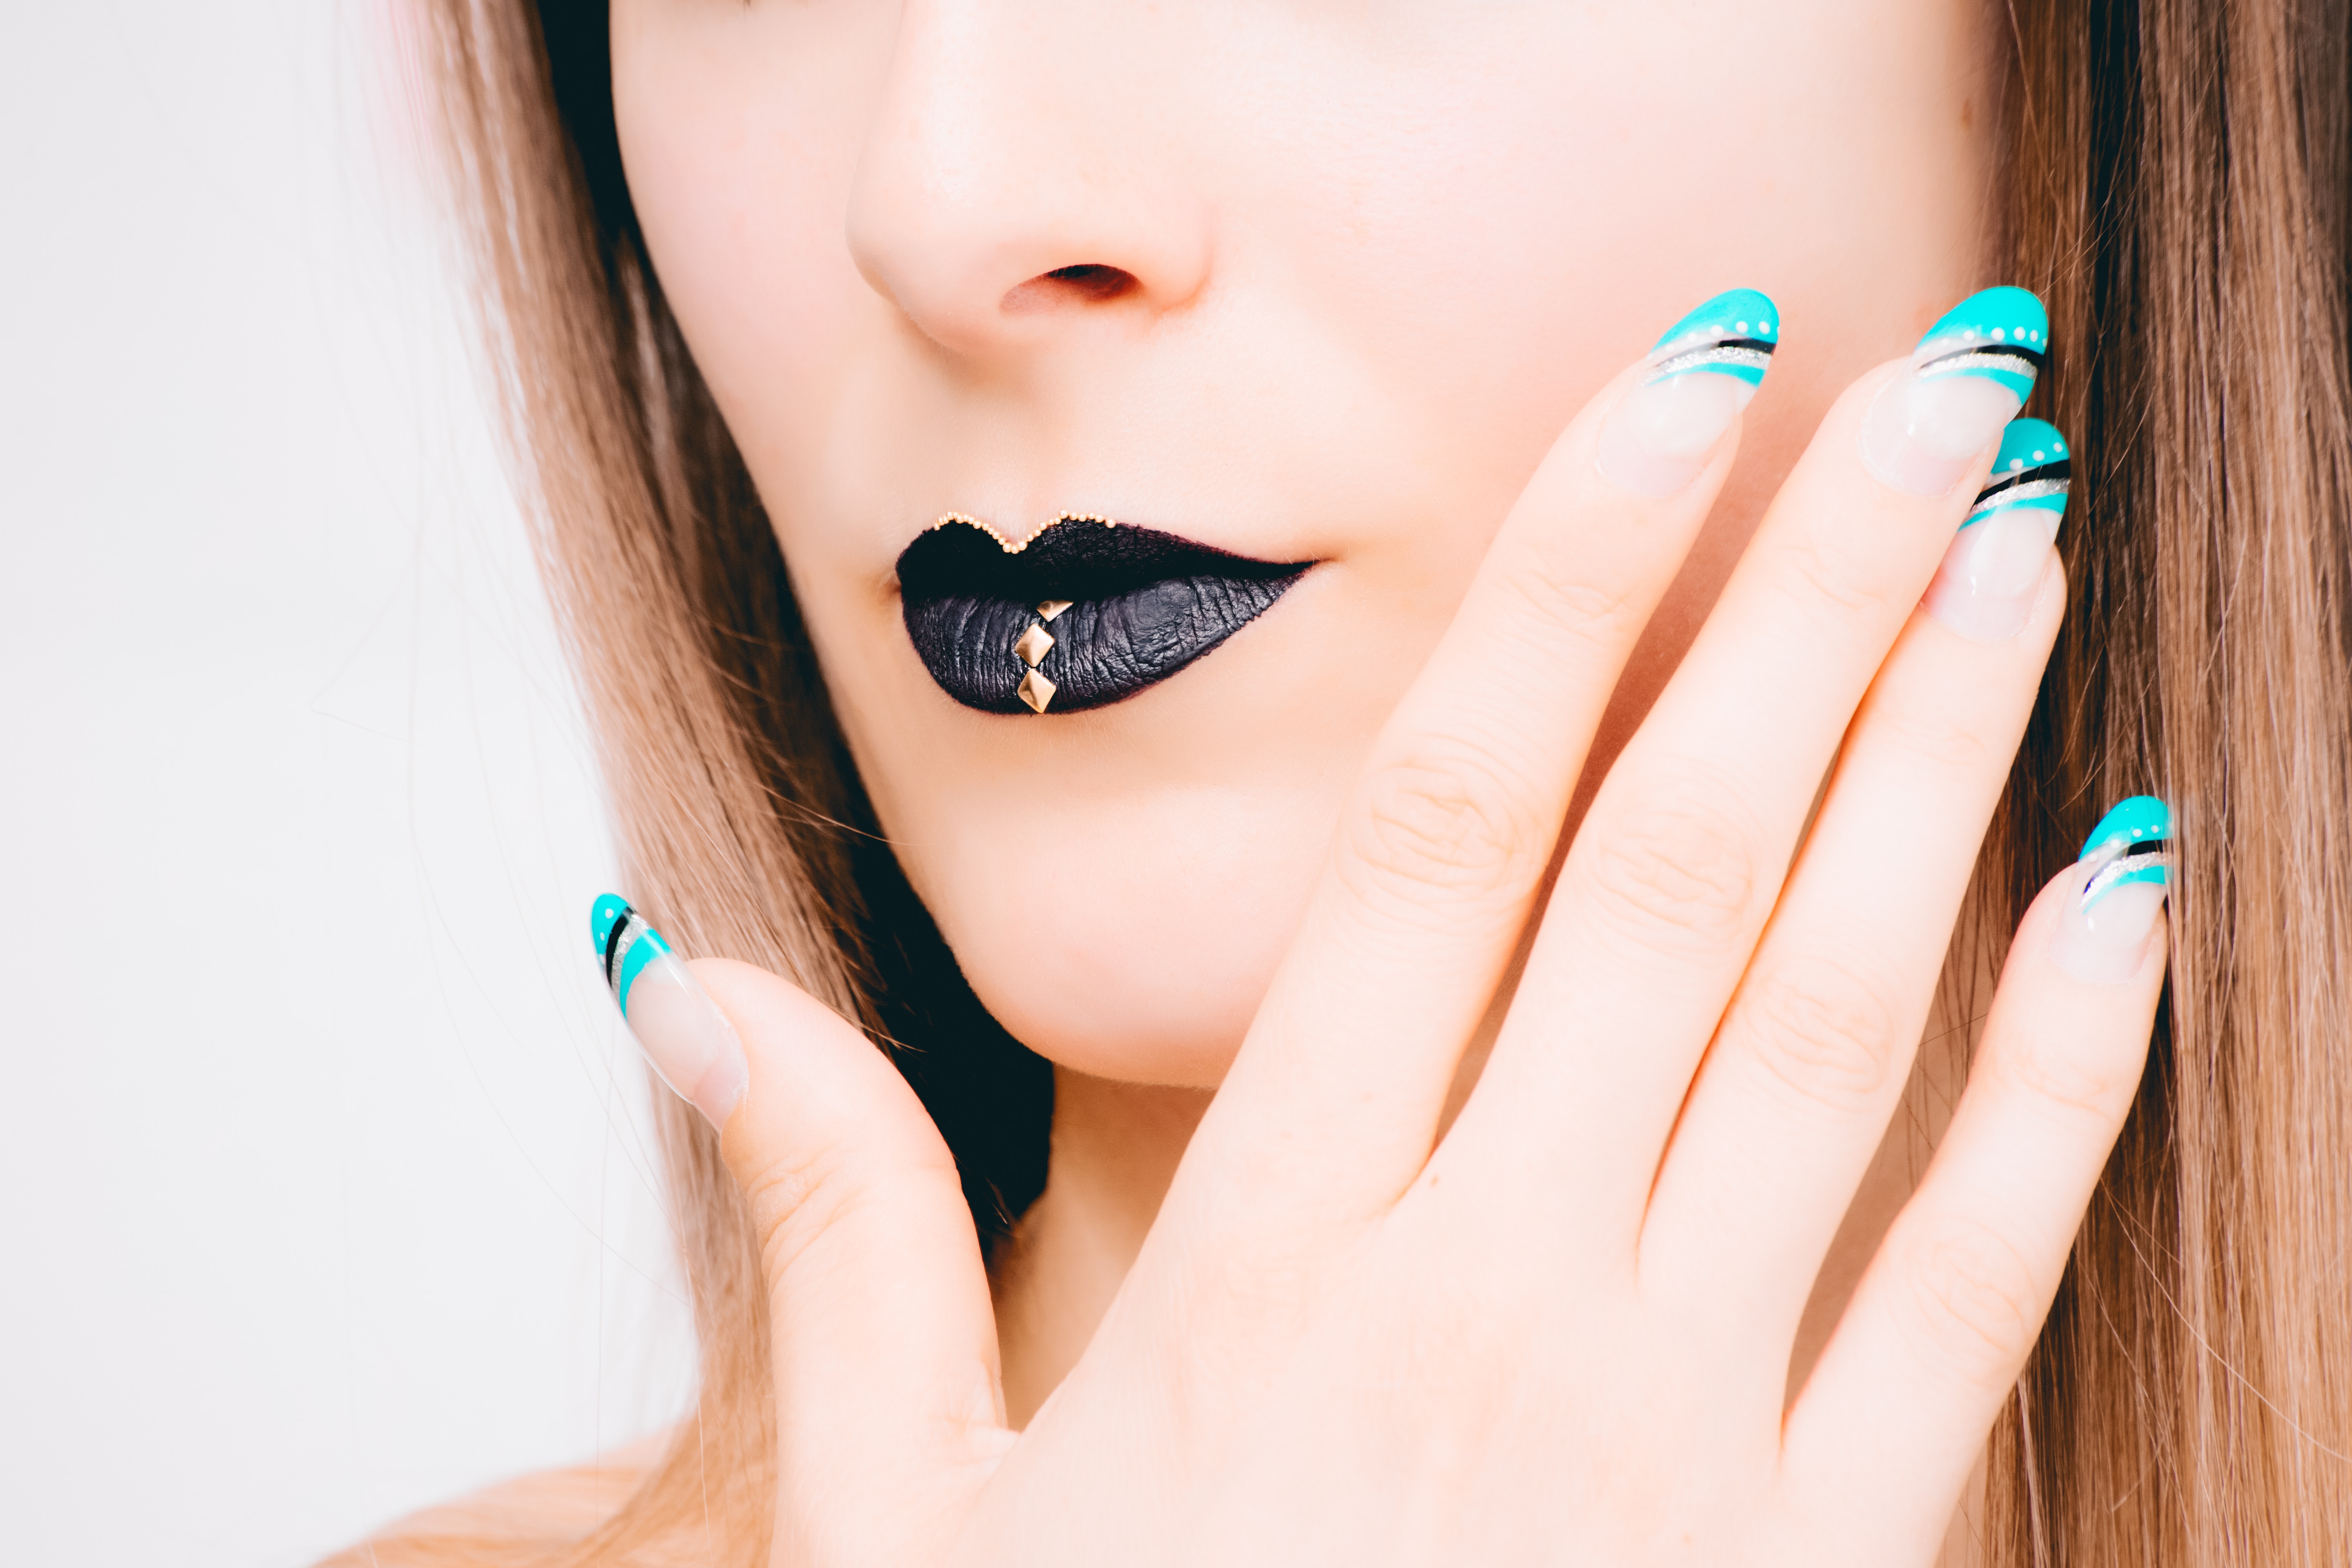 Woman with black lipstick and teal nail polish photo